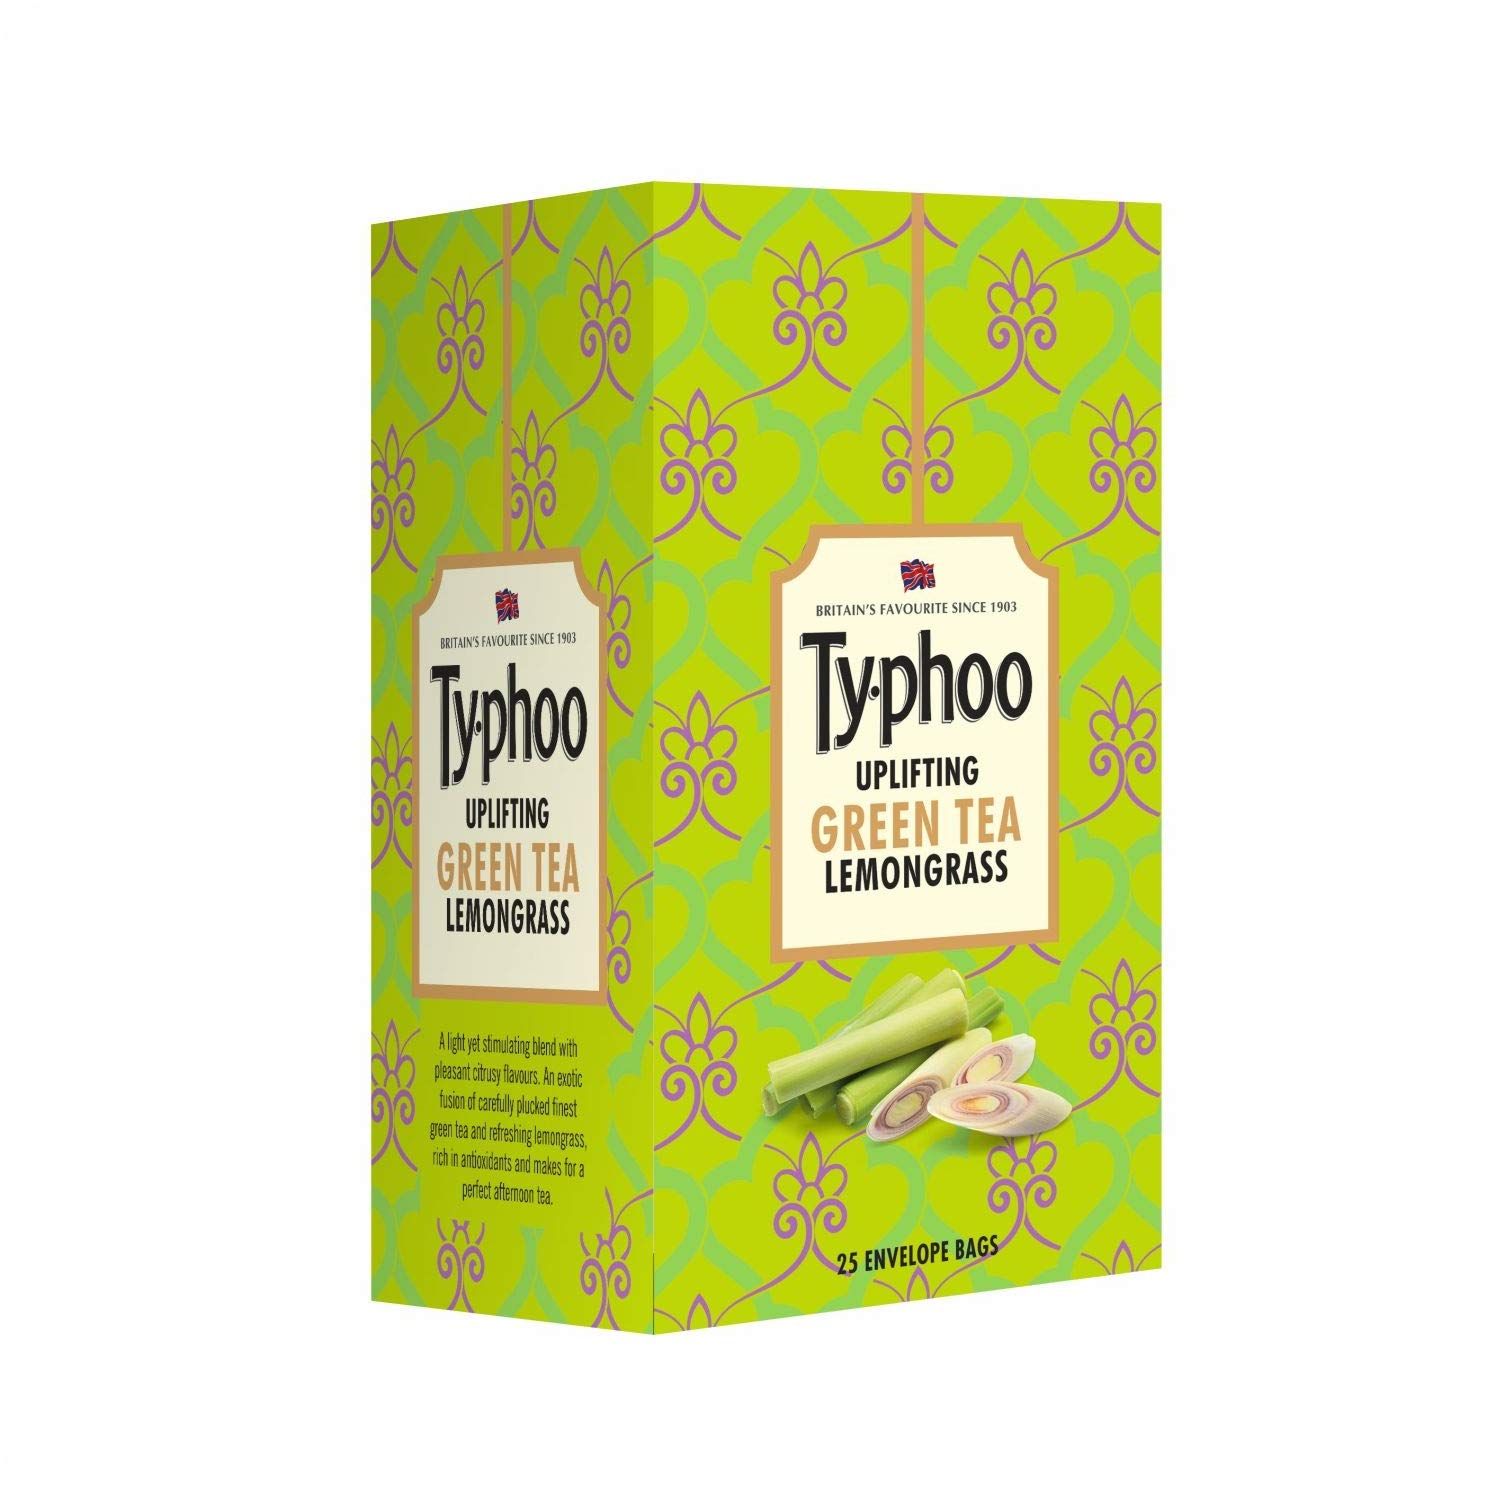 Typhoo Uplifting Green Tea Bags Lemongrass Image